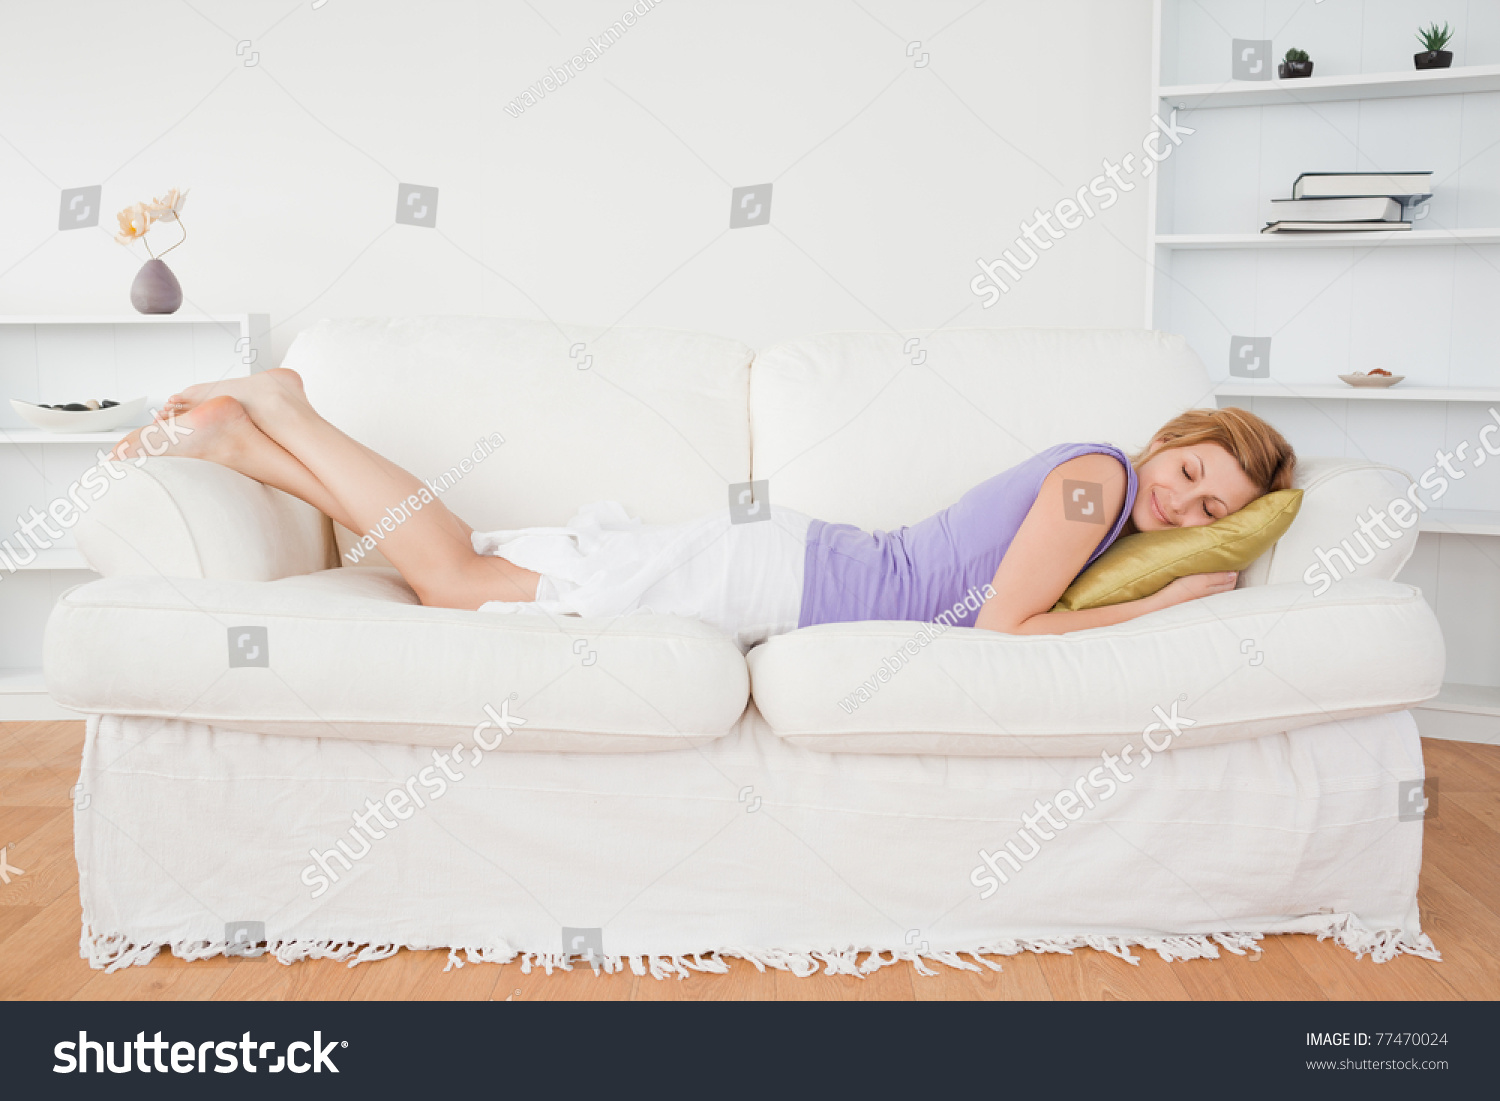 Лежат или лижат. Девушка лежит на диване отдыхает. Девушка лежит на диване на животе. Упражнения лежа на диване с телефоном.